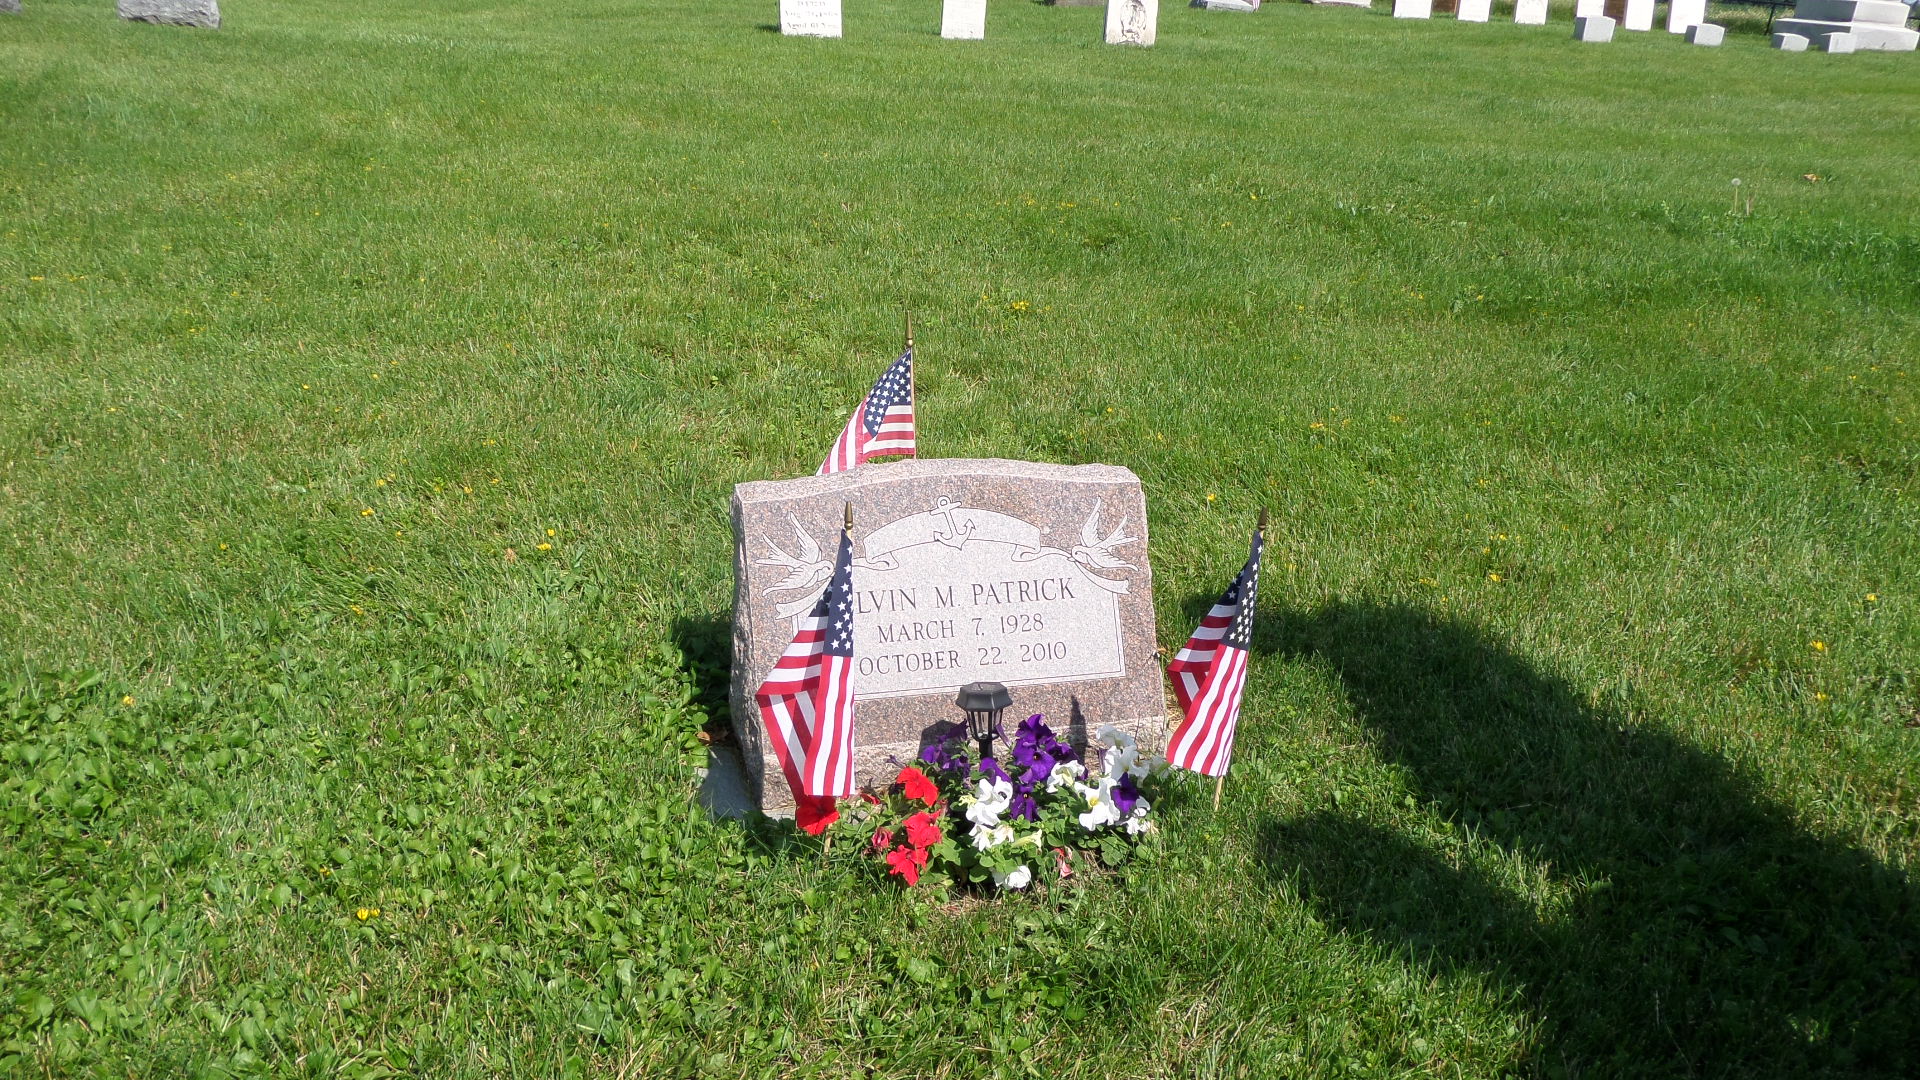 Dad's grave